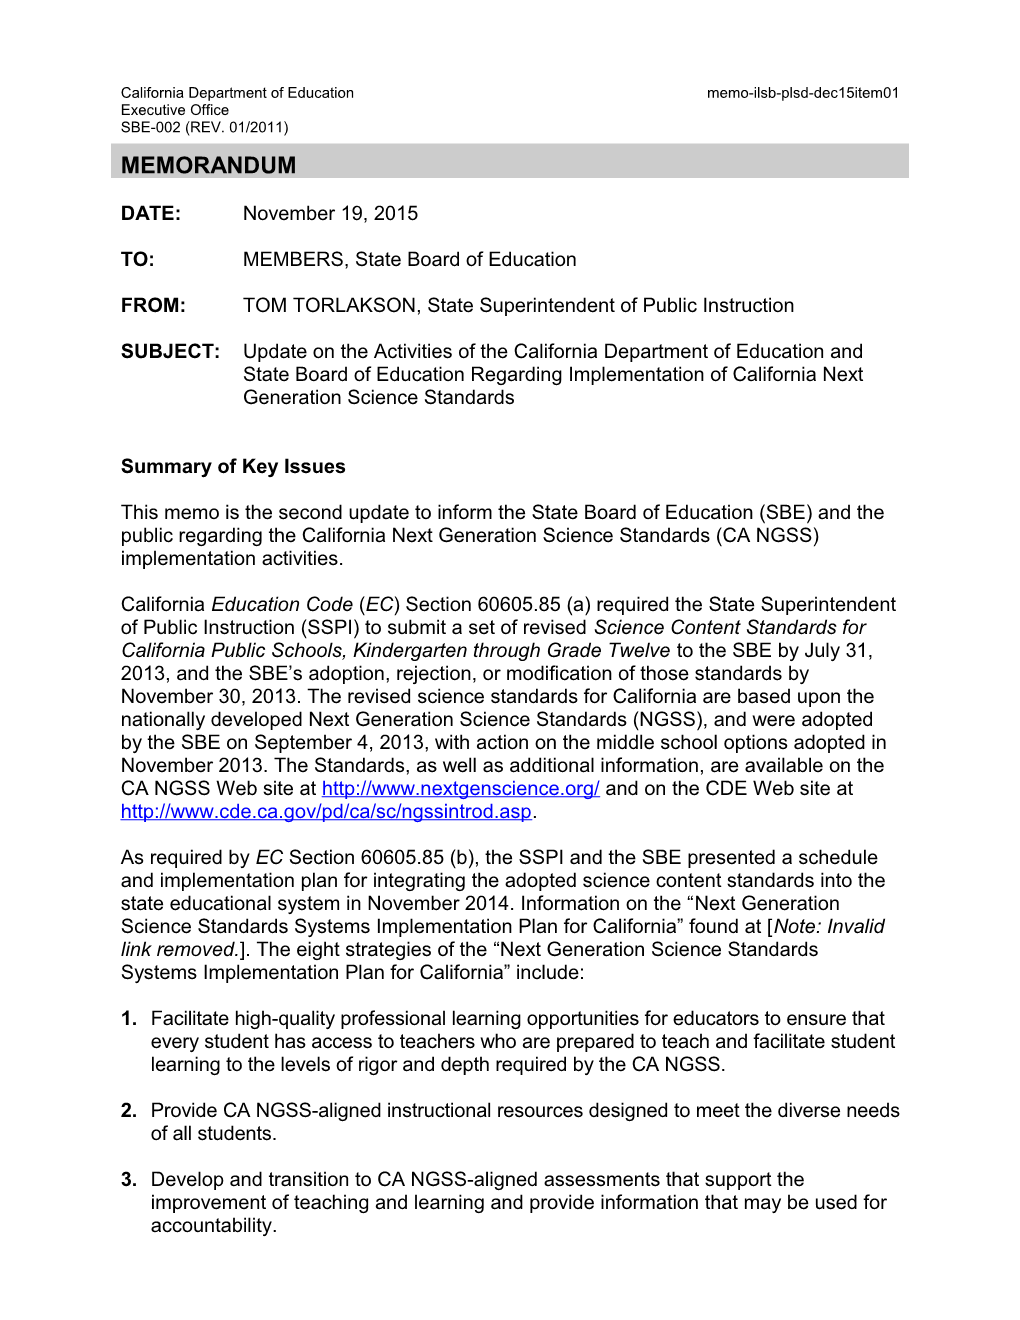 December 2015 Memo PLSD Item 01 - Information Memorandum (CA State Board of Education)